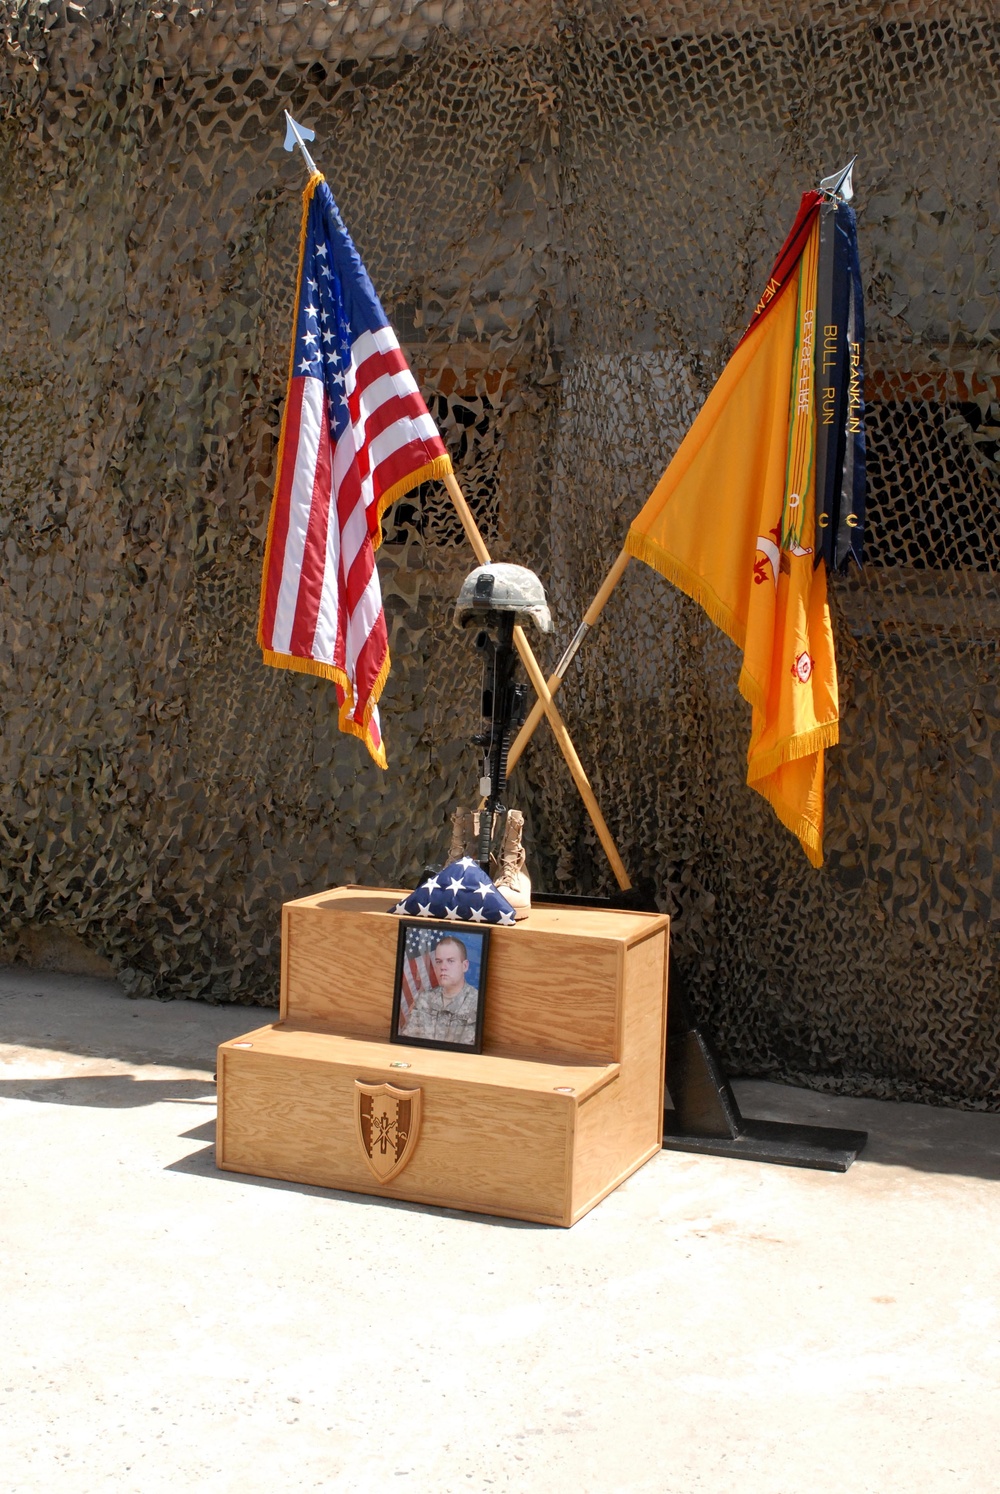 Task Force Raider Remembers Fallen Soldier